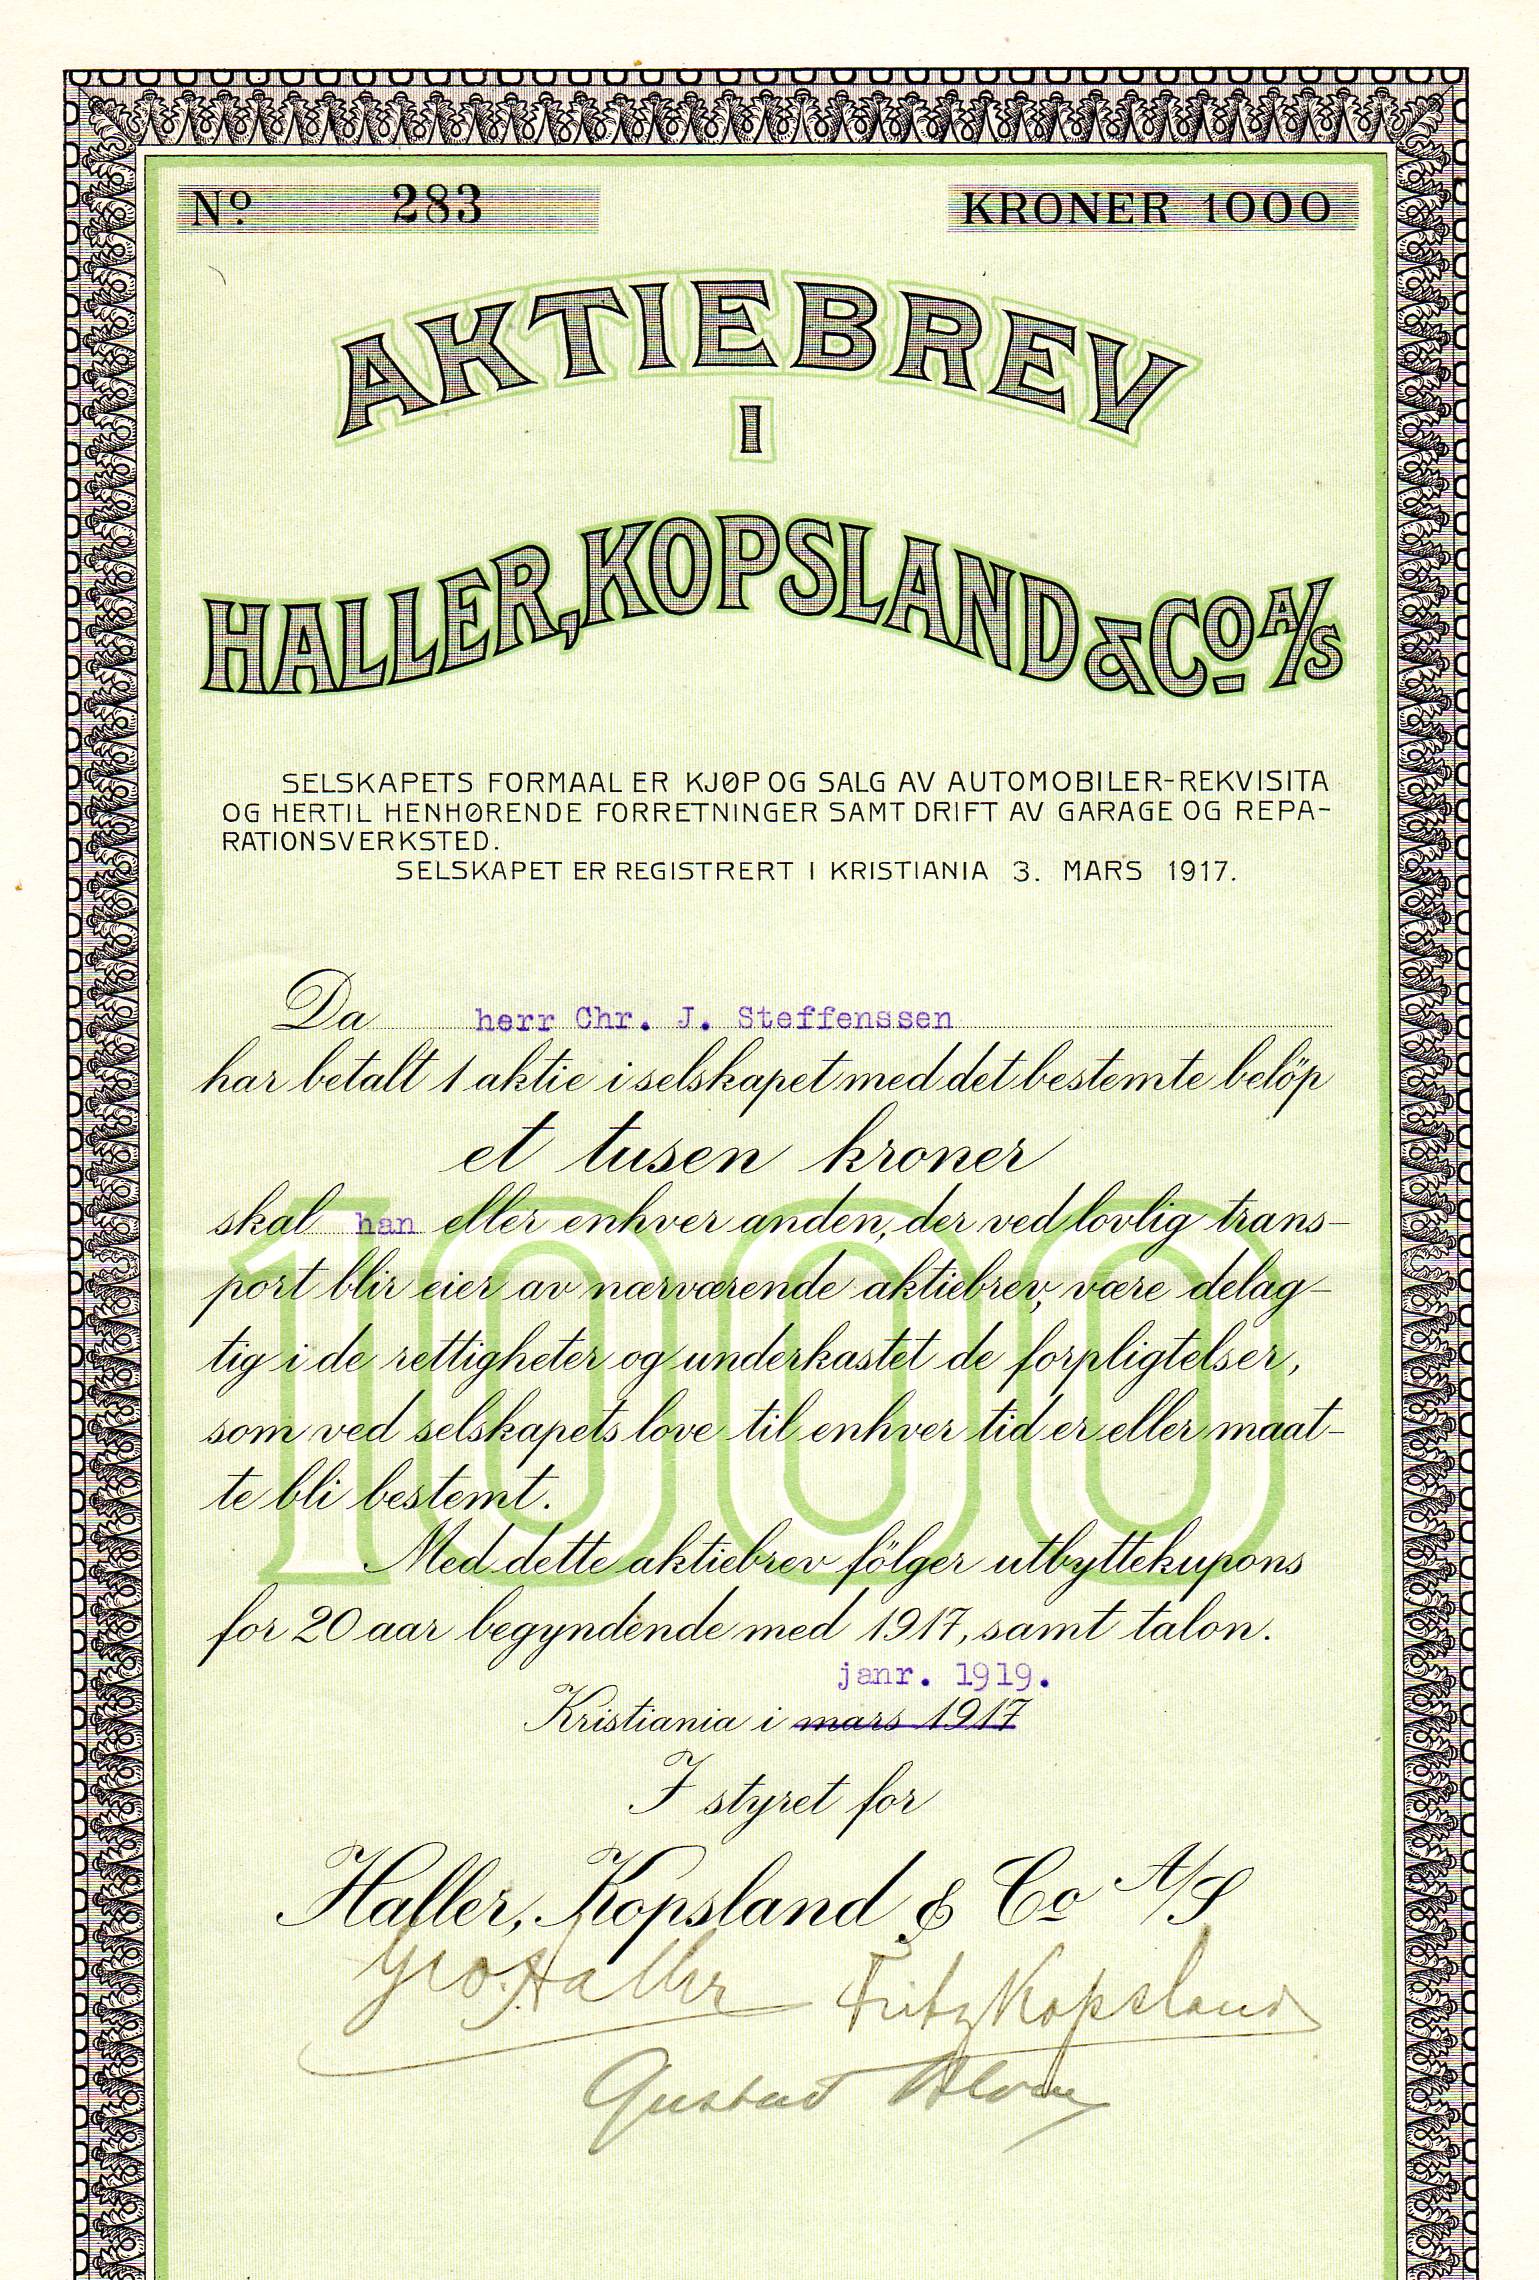 Aktiebrev i Haller,Kopsland&co kr 1000 no283 1919 kristiania